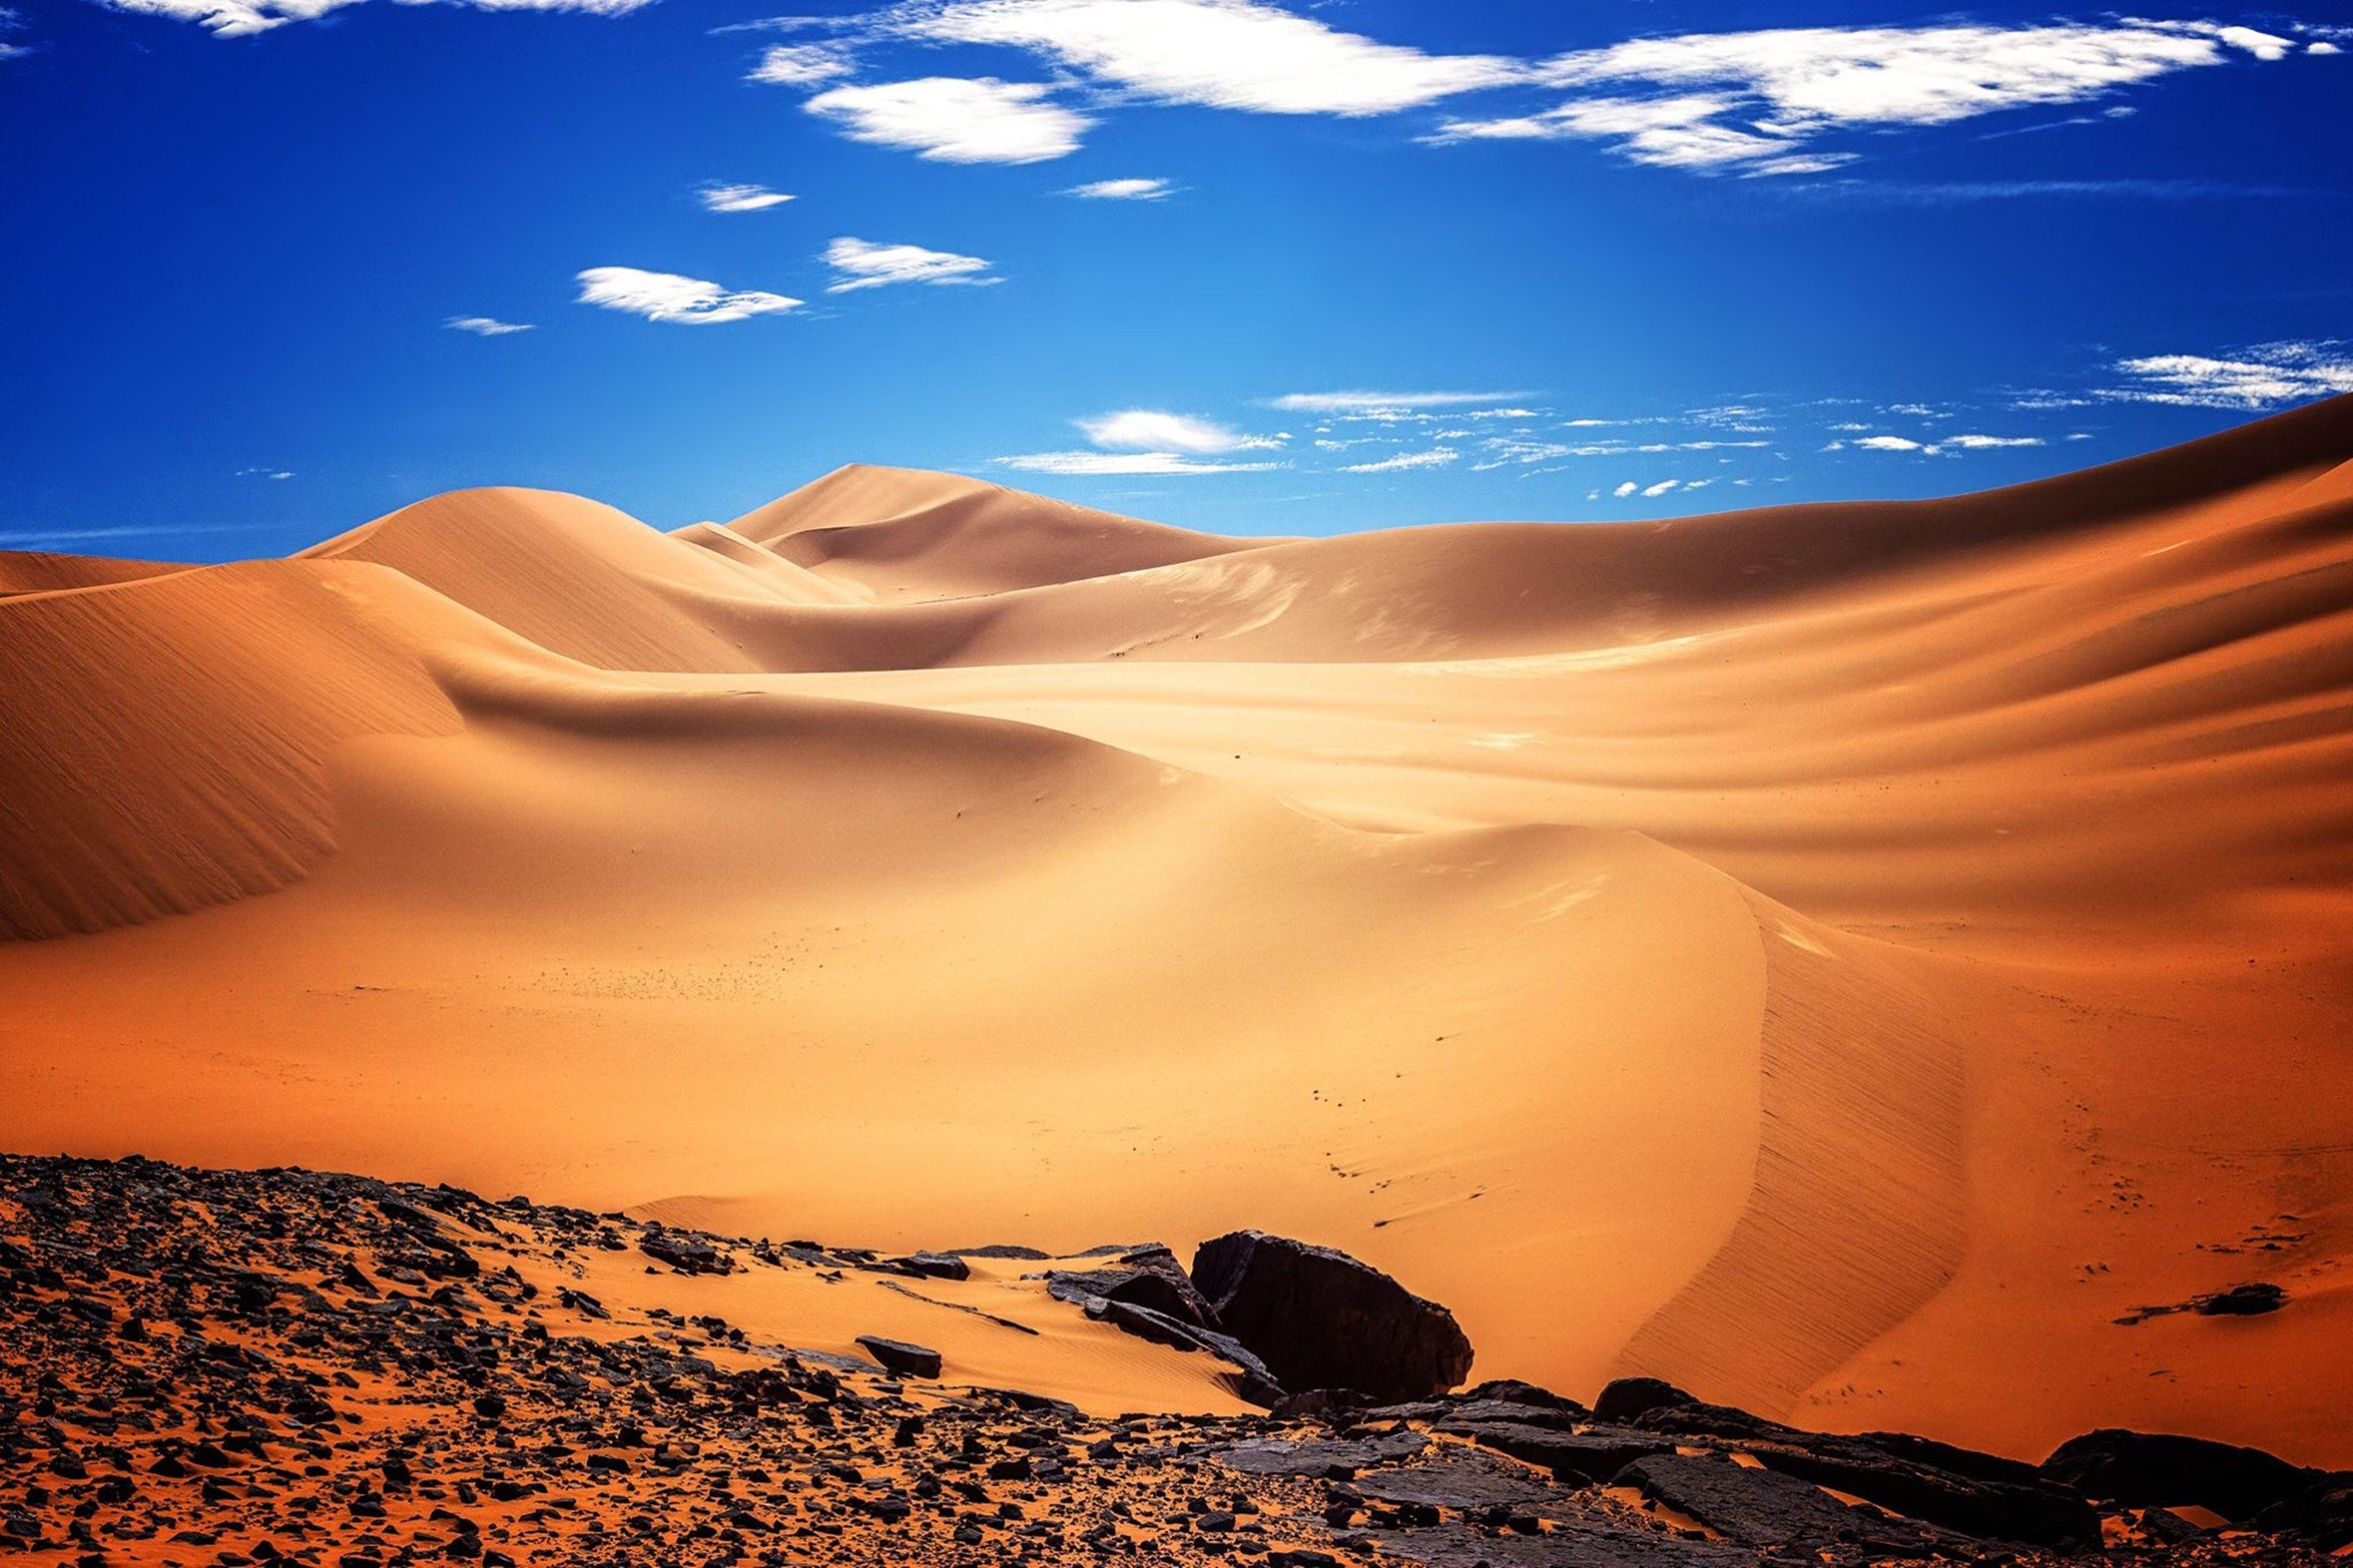 4k Desert Wallpapers Top Free 4k Desert Backgrounds Wallpaperaccess